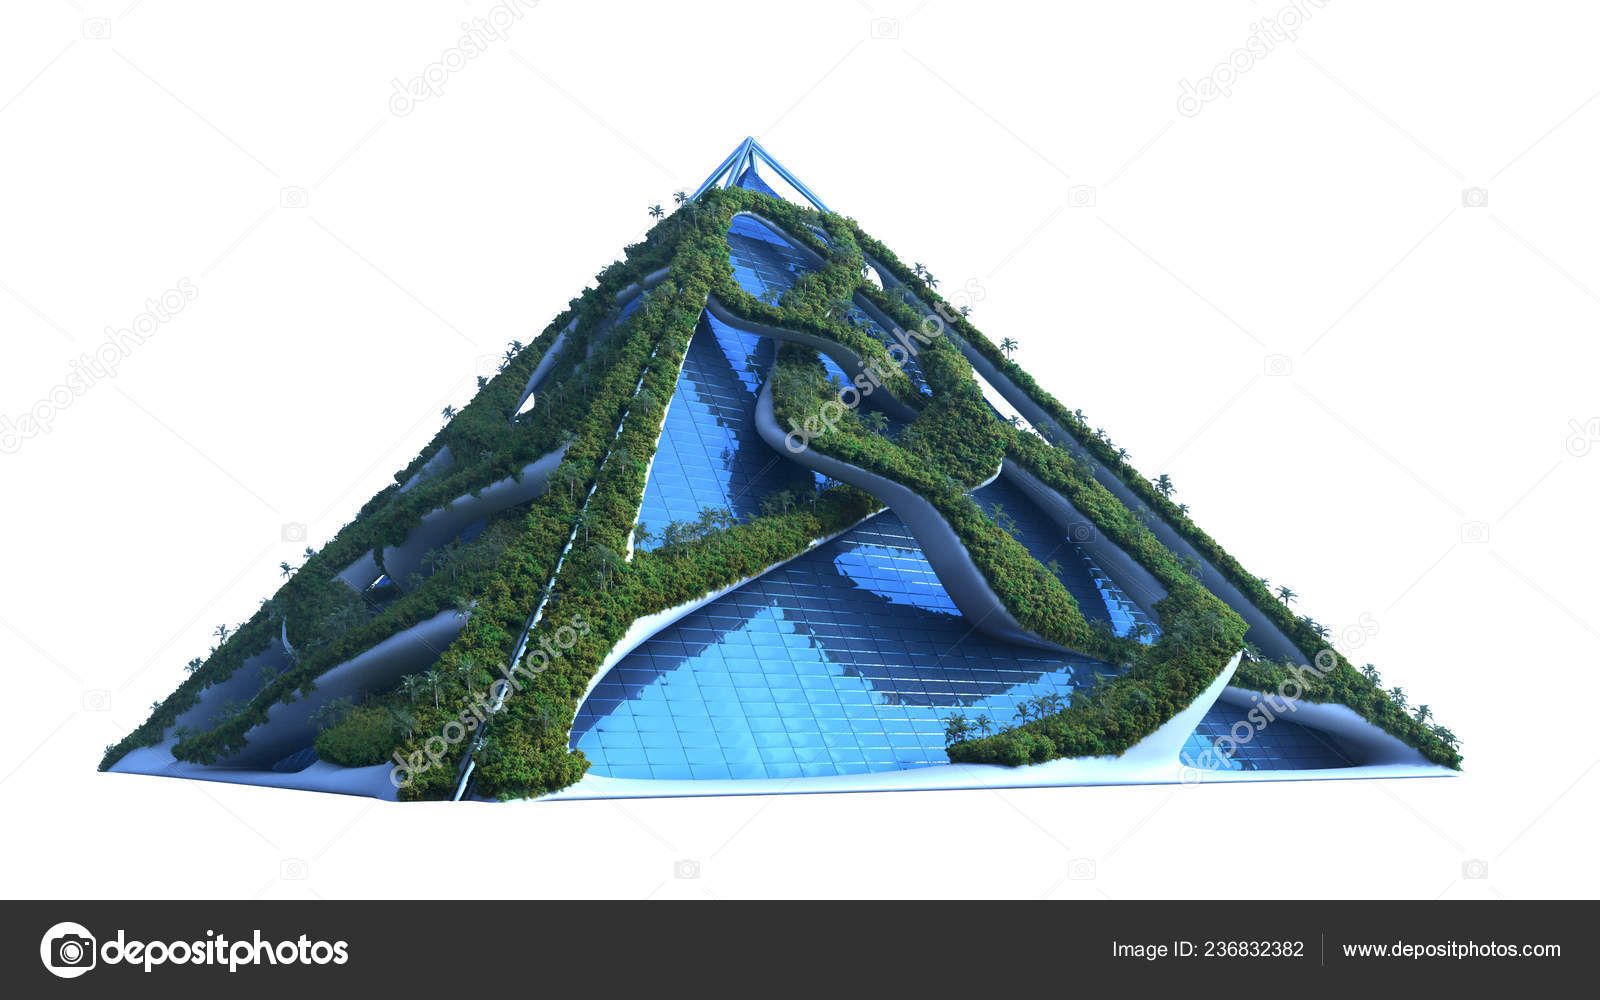 Rendering Futuristic Pyramid Enclosed Vine Structures Covered